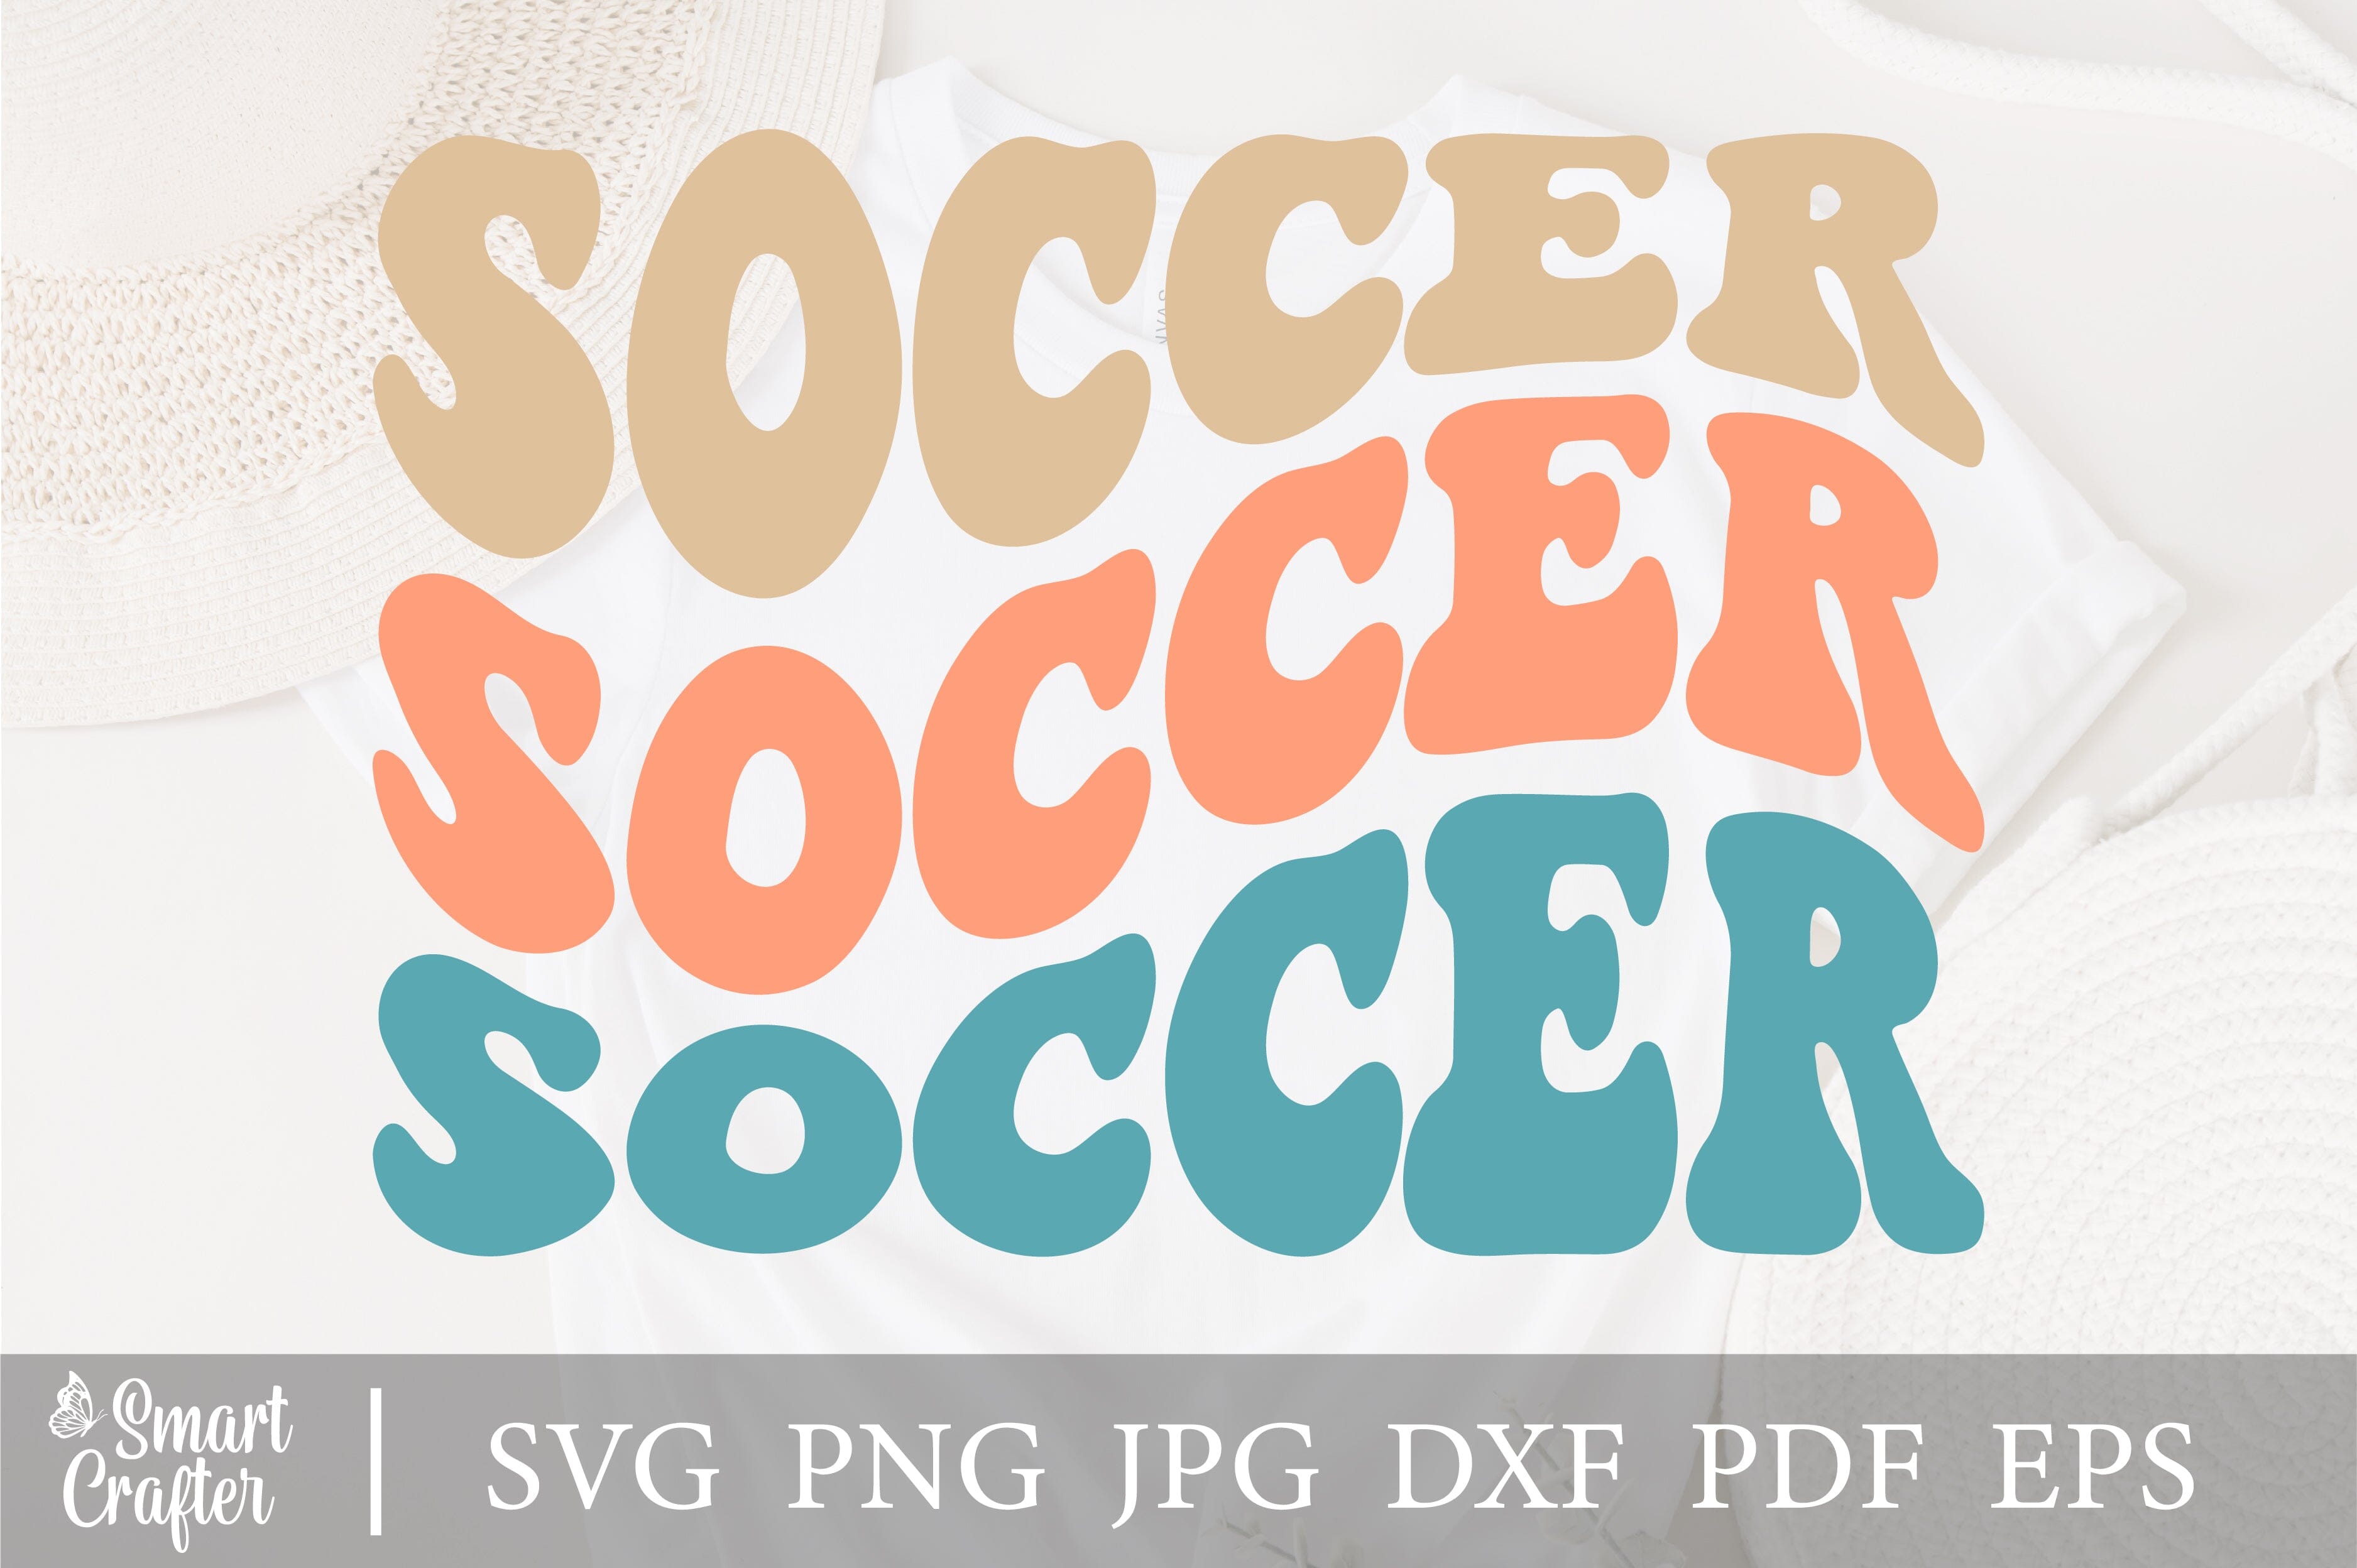 Soccer Jersey Svg Soccer Jersey Png Soccer Jersey Clipart 